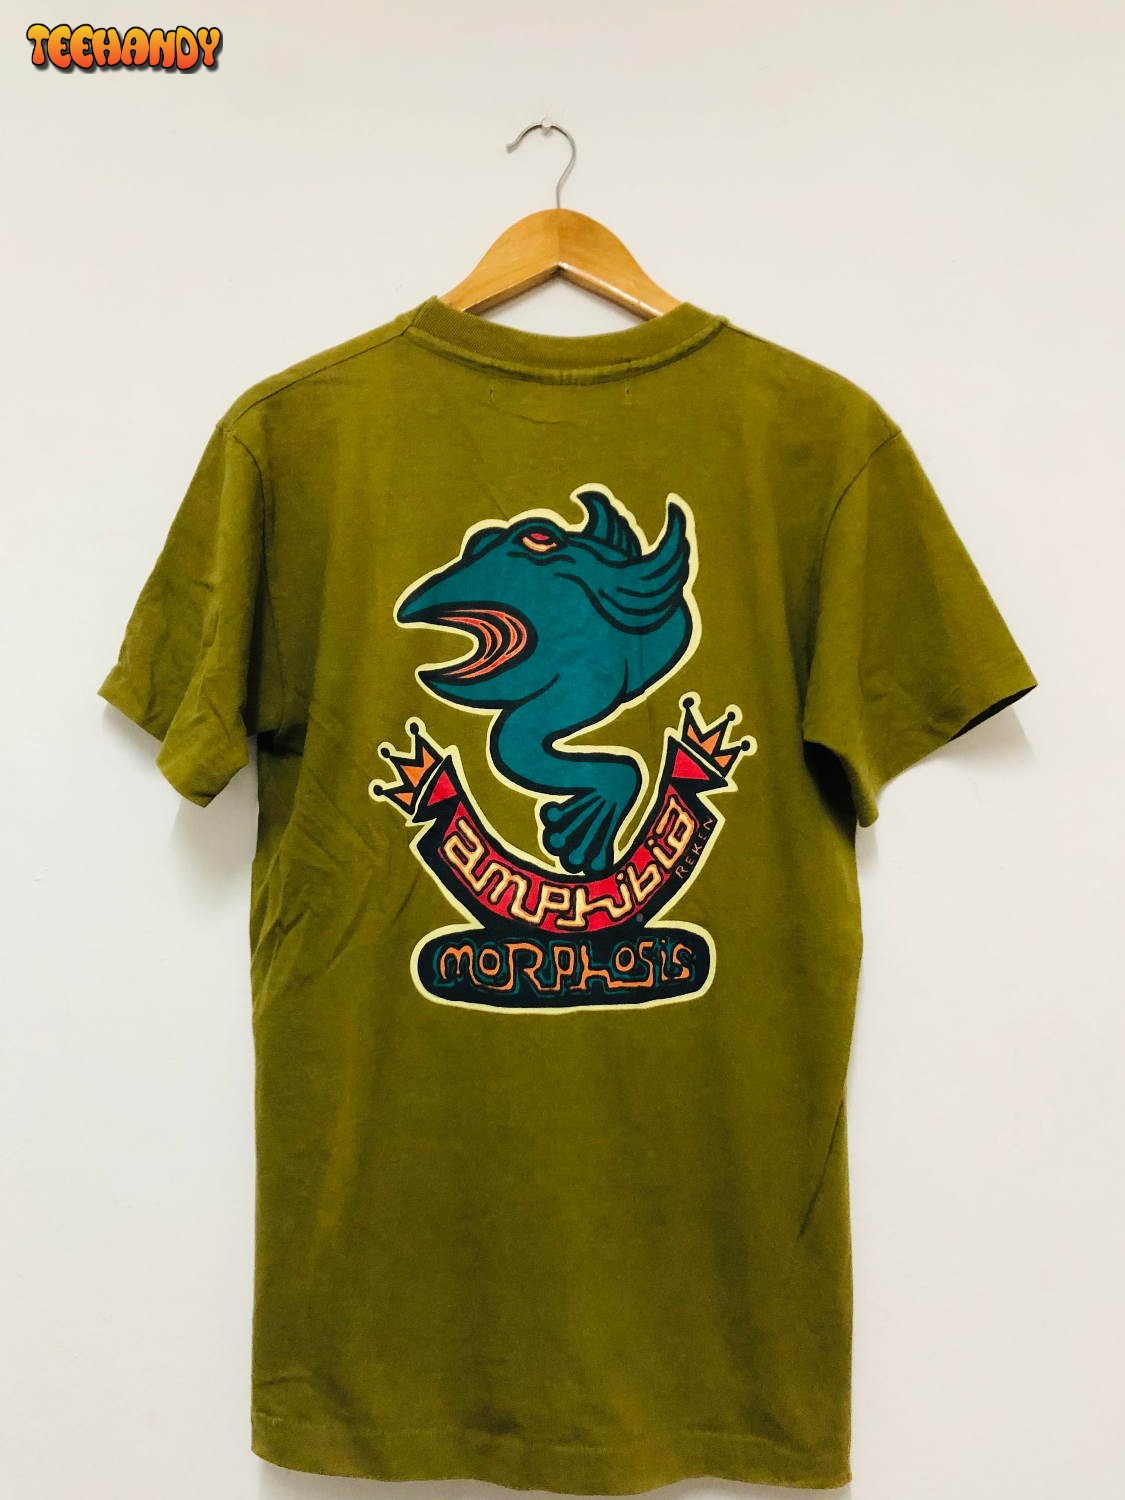 Vintage Original 90s Amphibia Morphosis Artwork by Reken T-Shirt